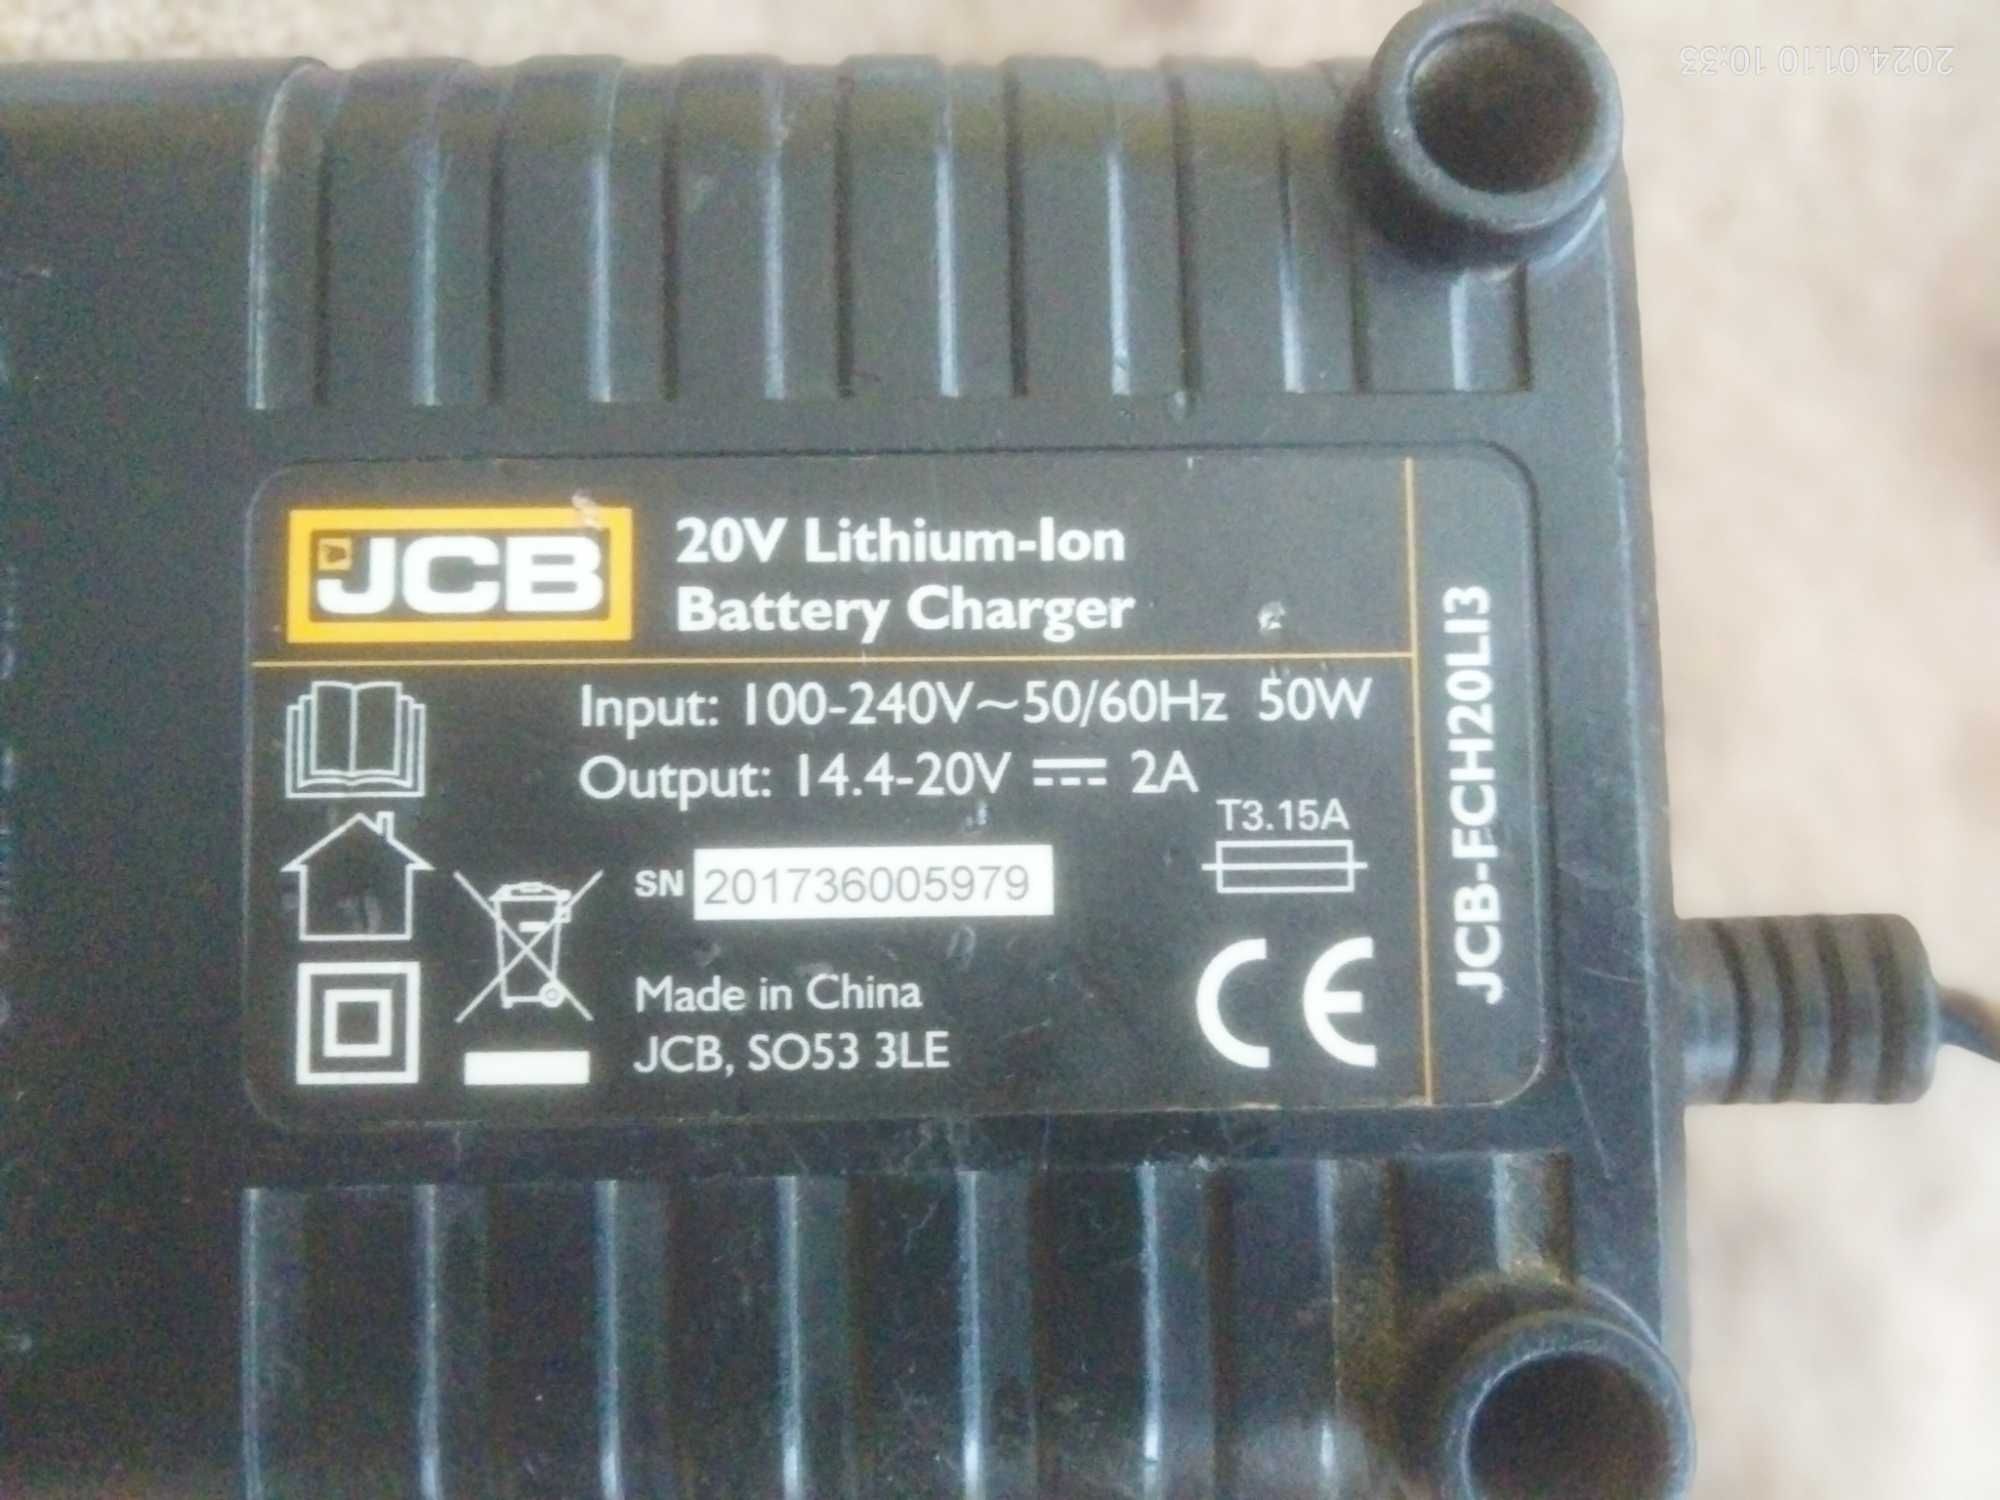 Baterii bormasina JCB si incarcator